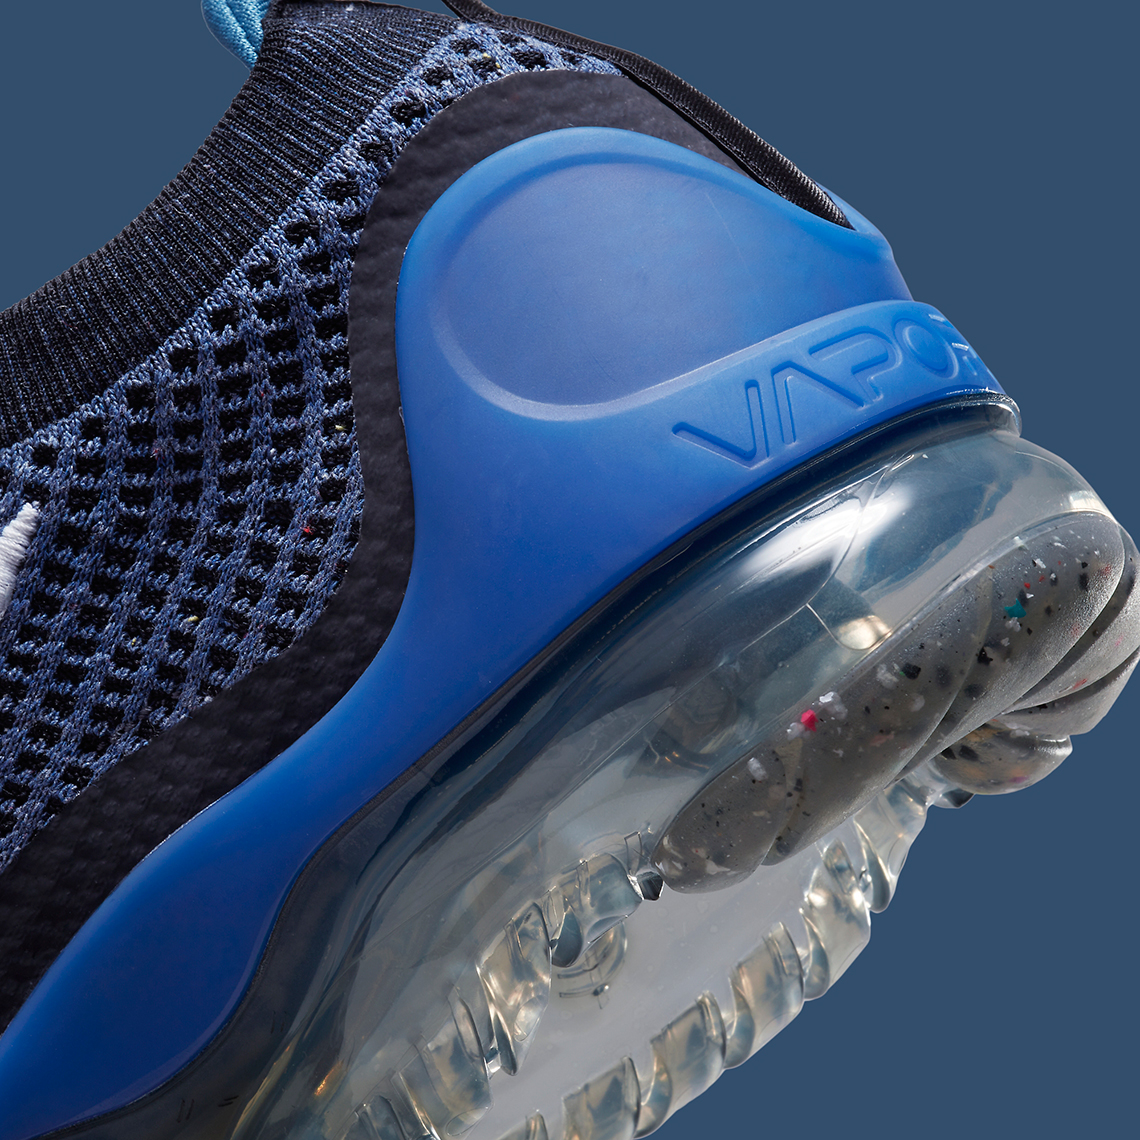 1639182125 460 Este Nike Vapormax Flyknit 2021 Game Royal emite vibraciones tenidas